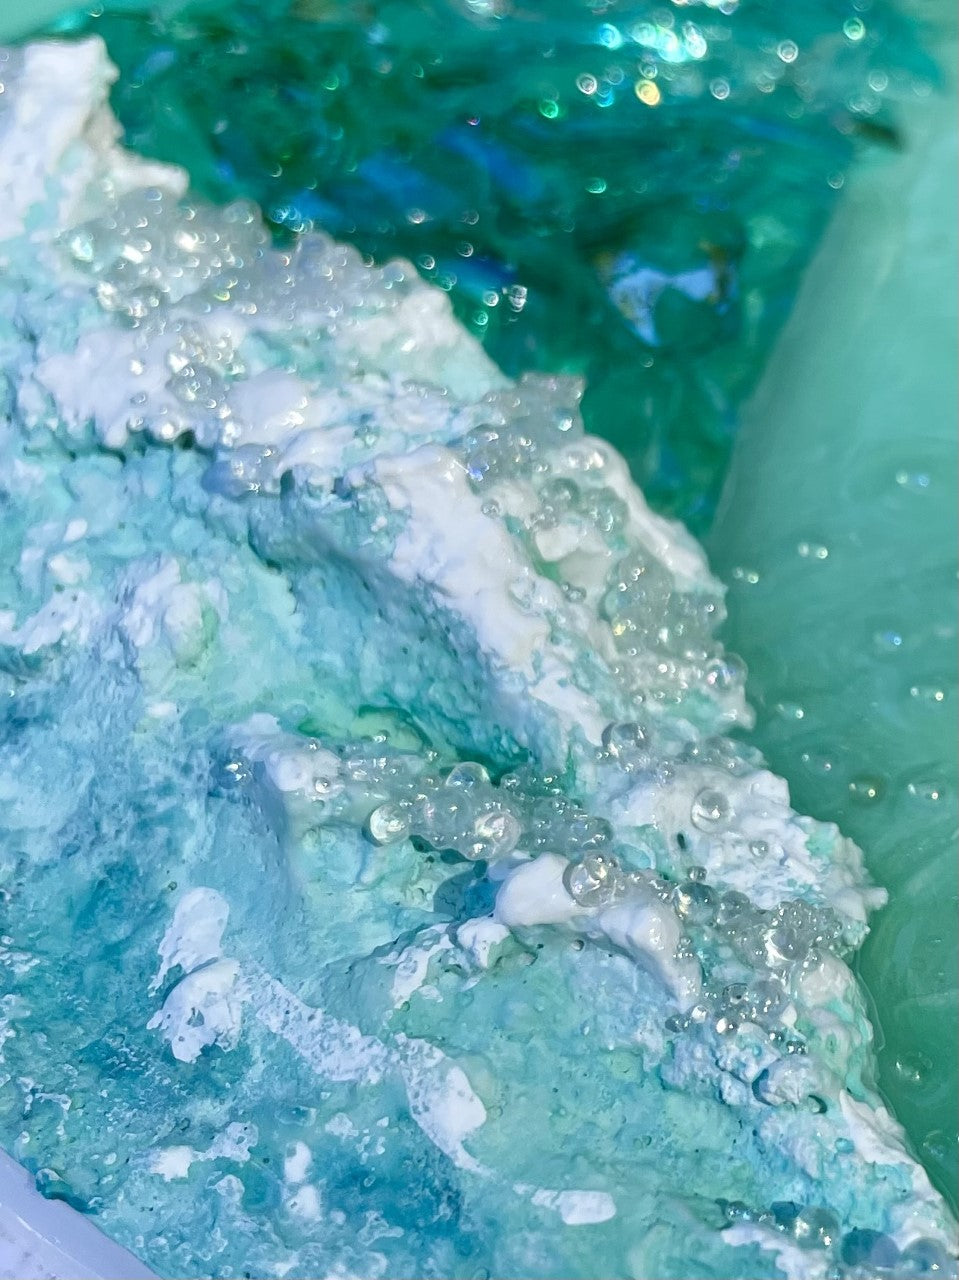 Aqua crushed glass mermaid tail and resin home decor